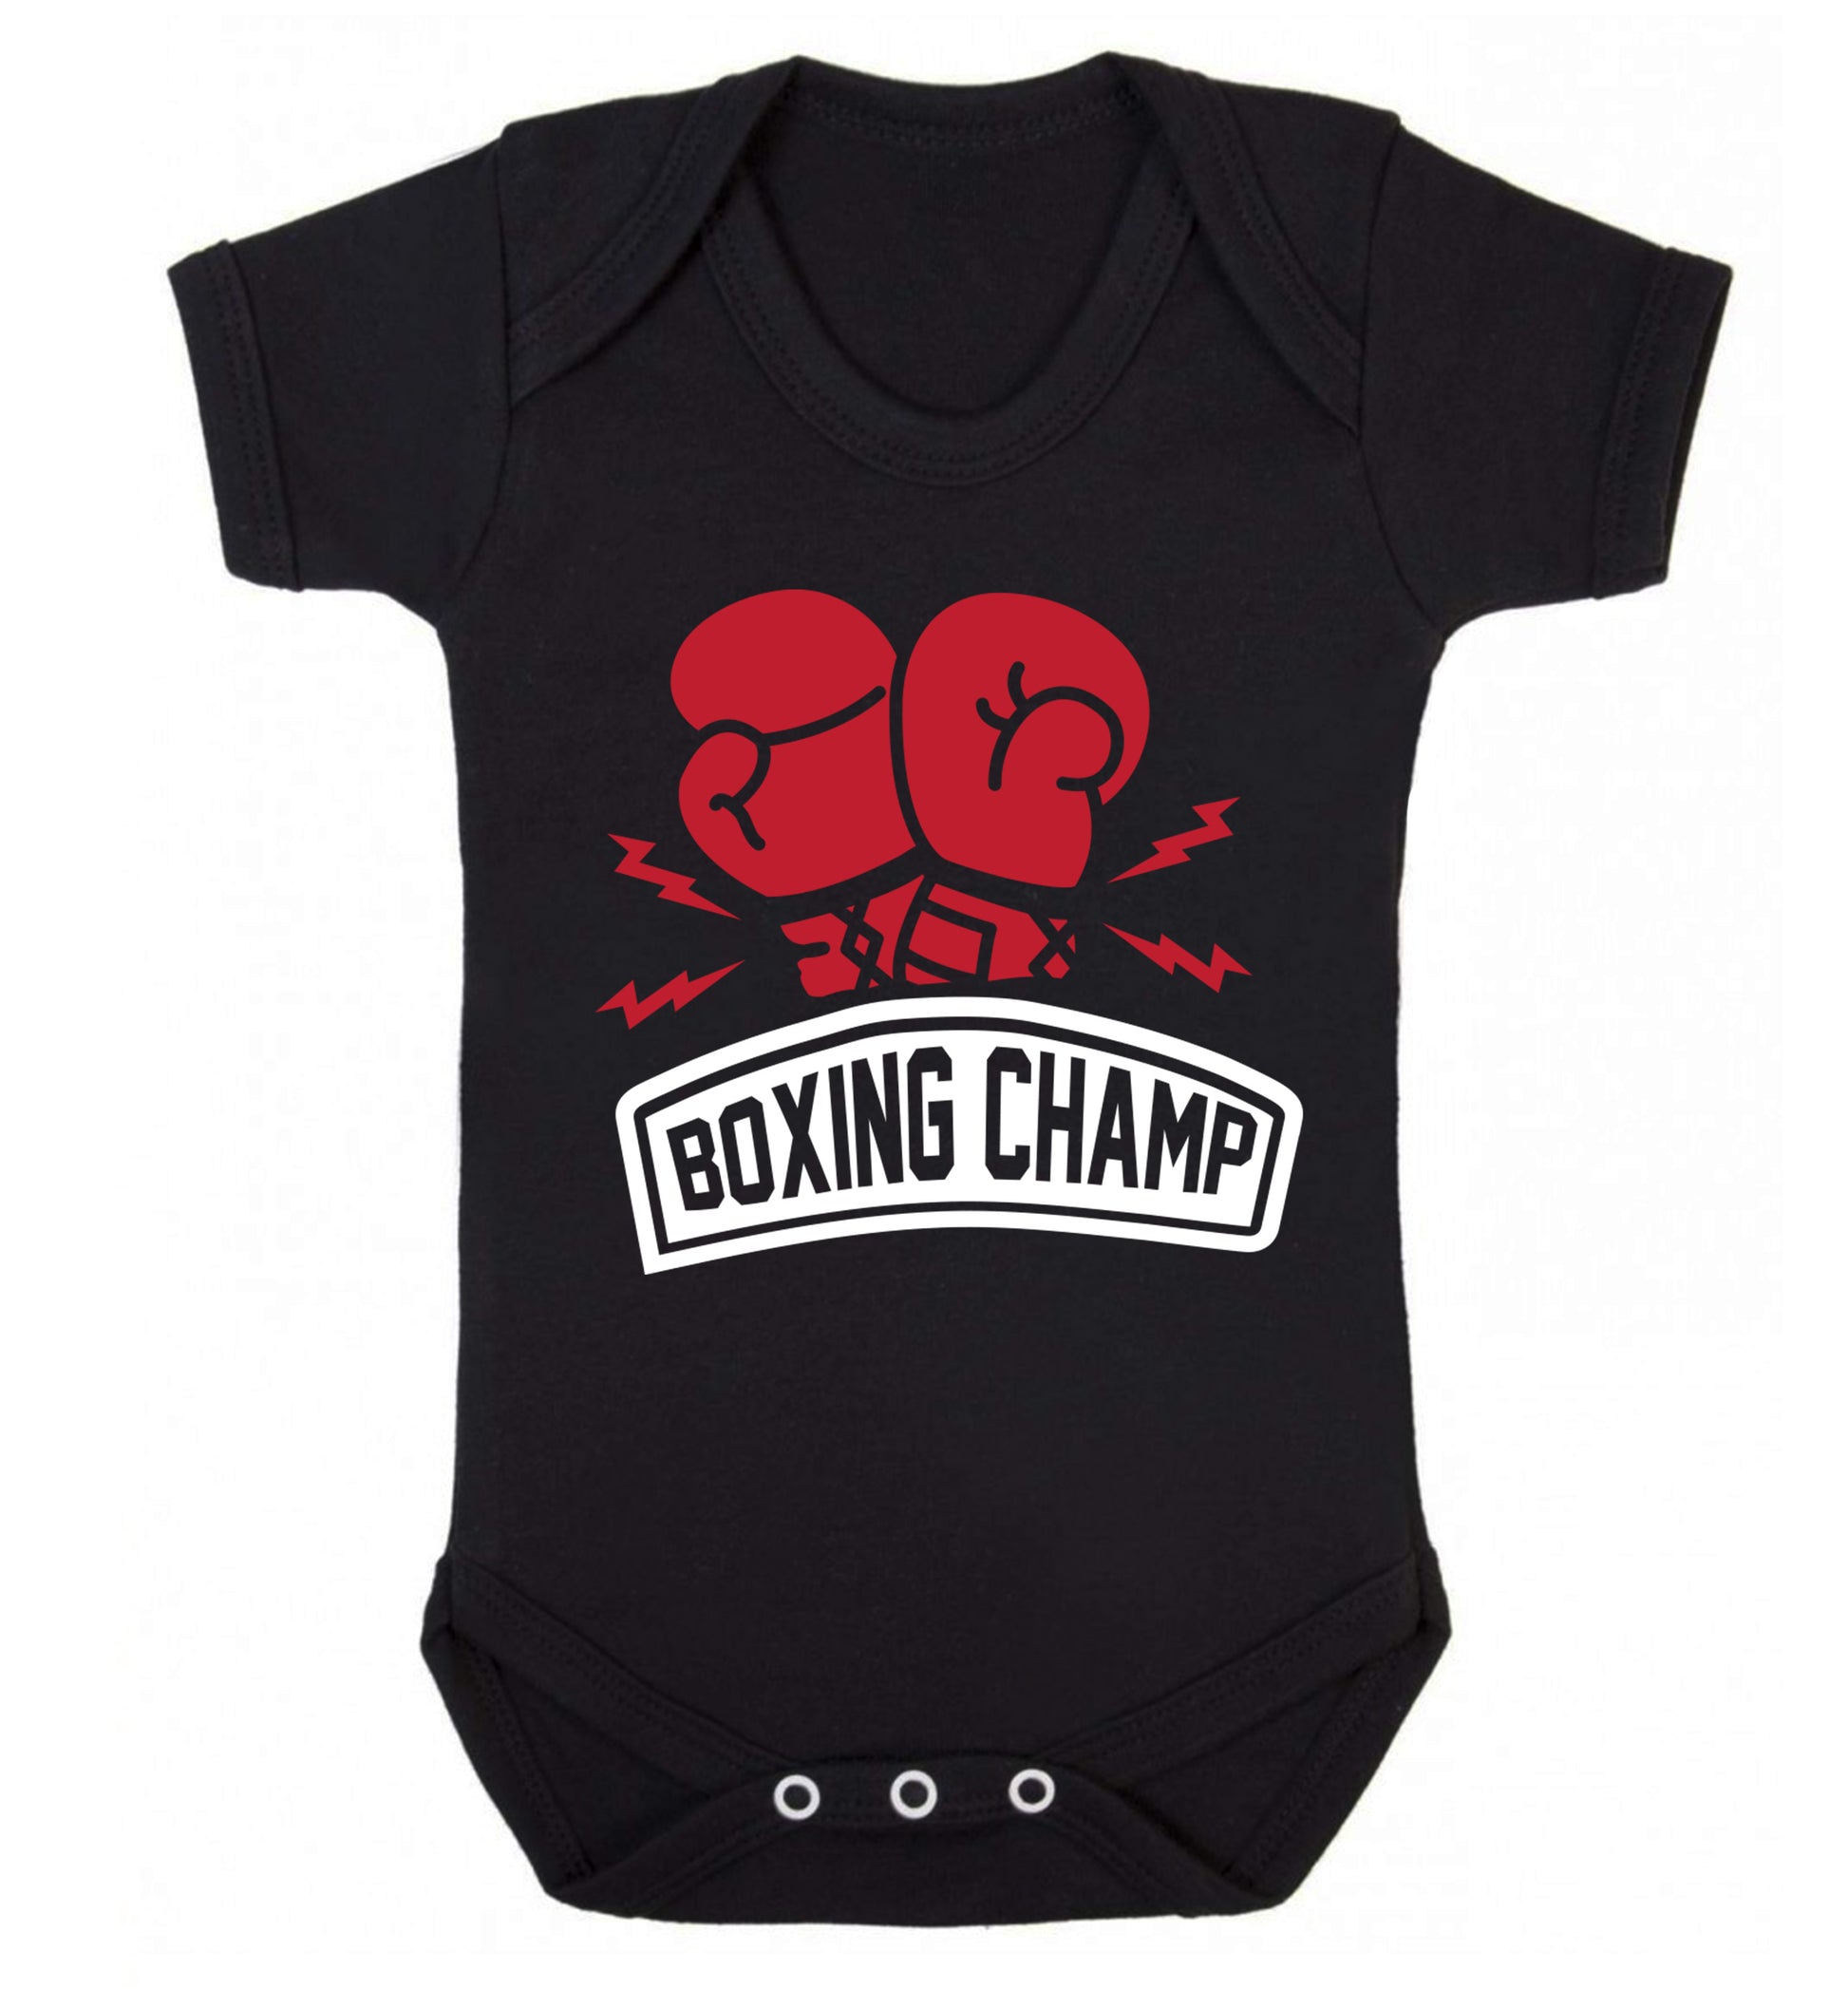 Boxing Champ Baby Vest black 18-24 months